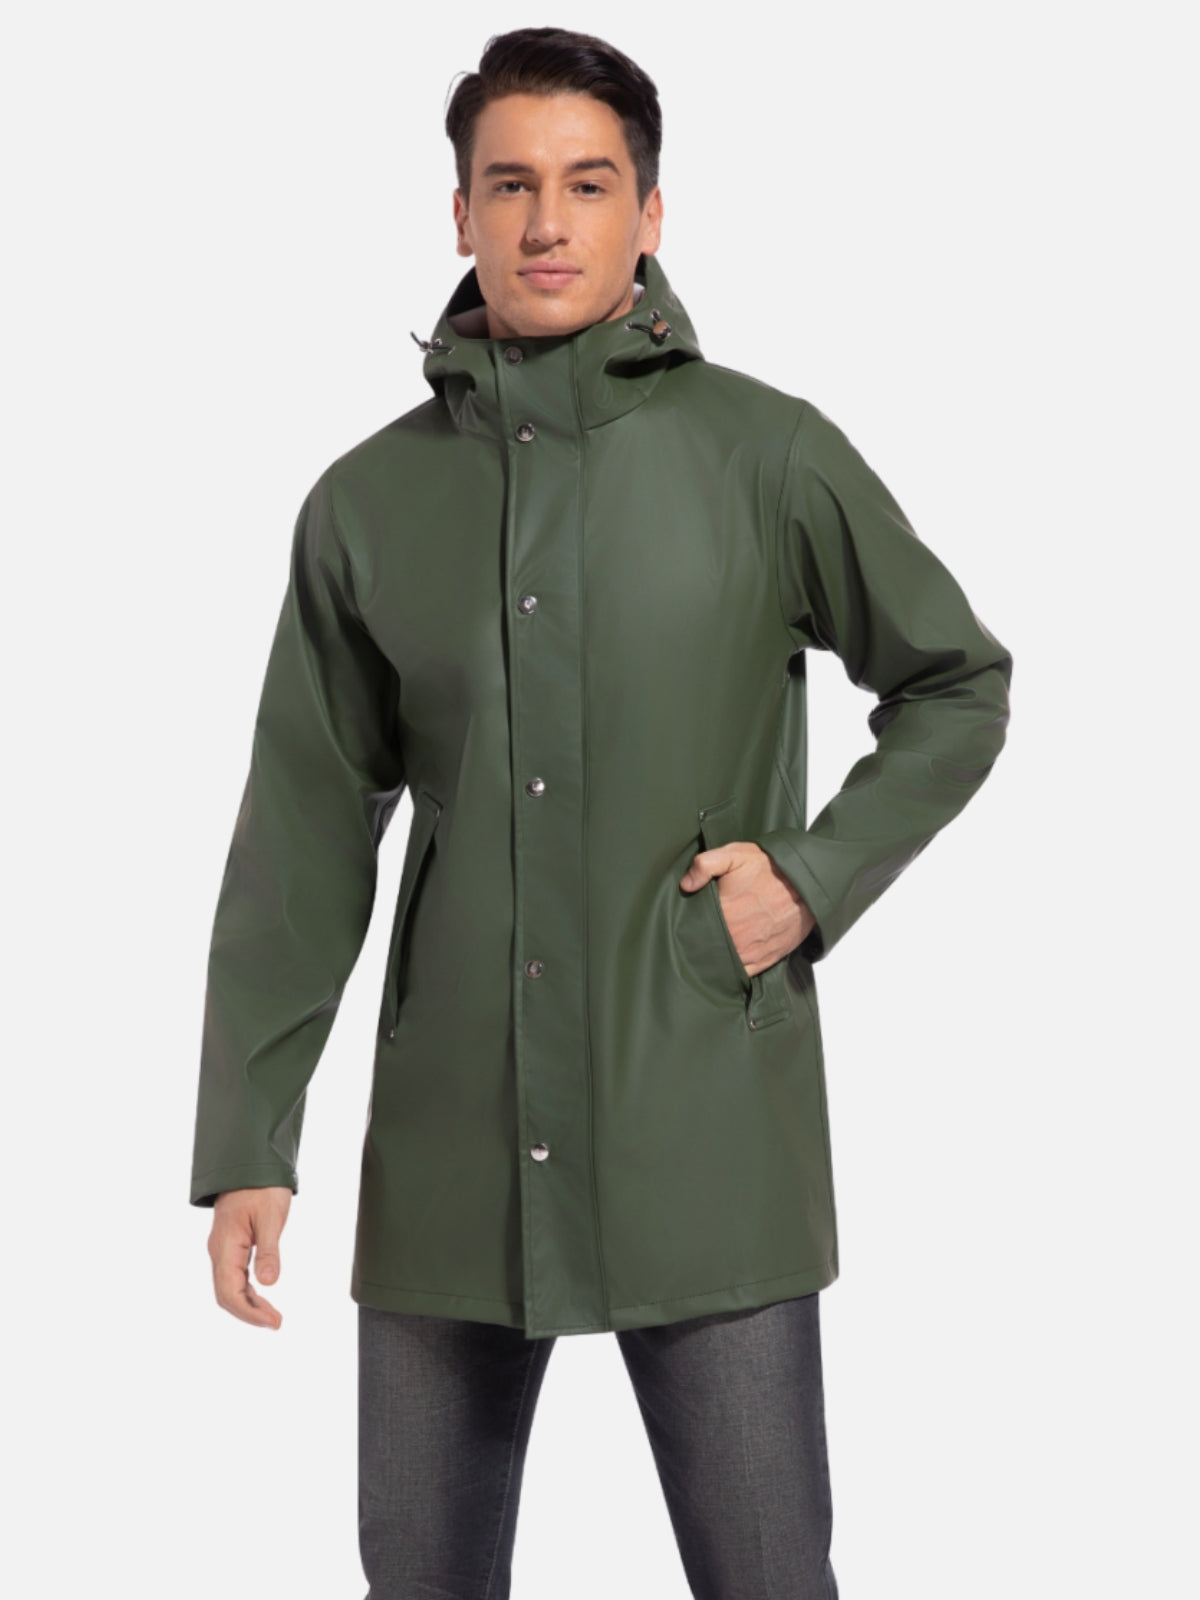 Men's Rain Jacket with Hooded Waterproof Long Raincoat